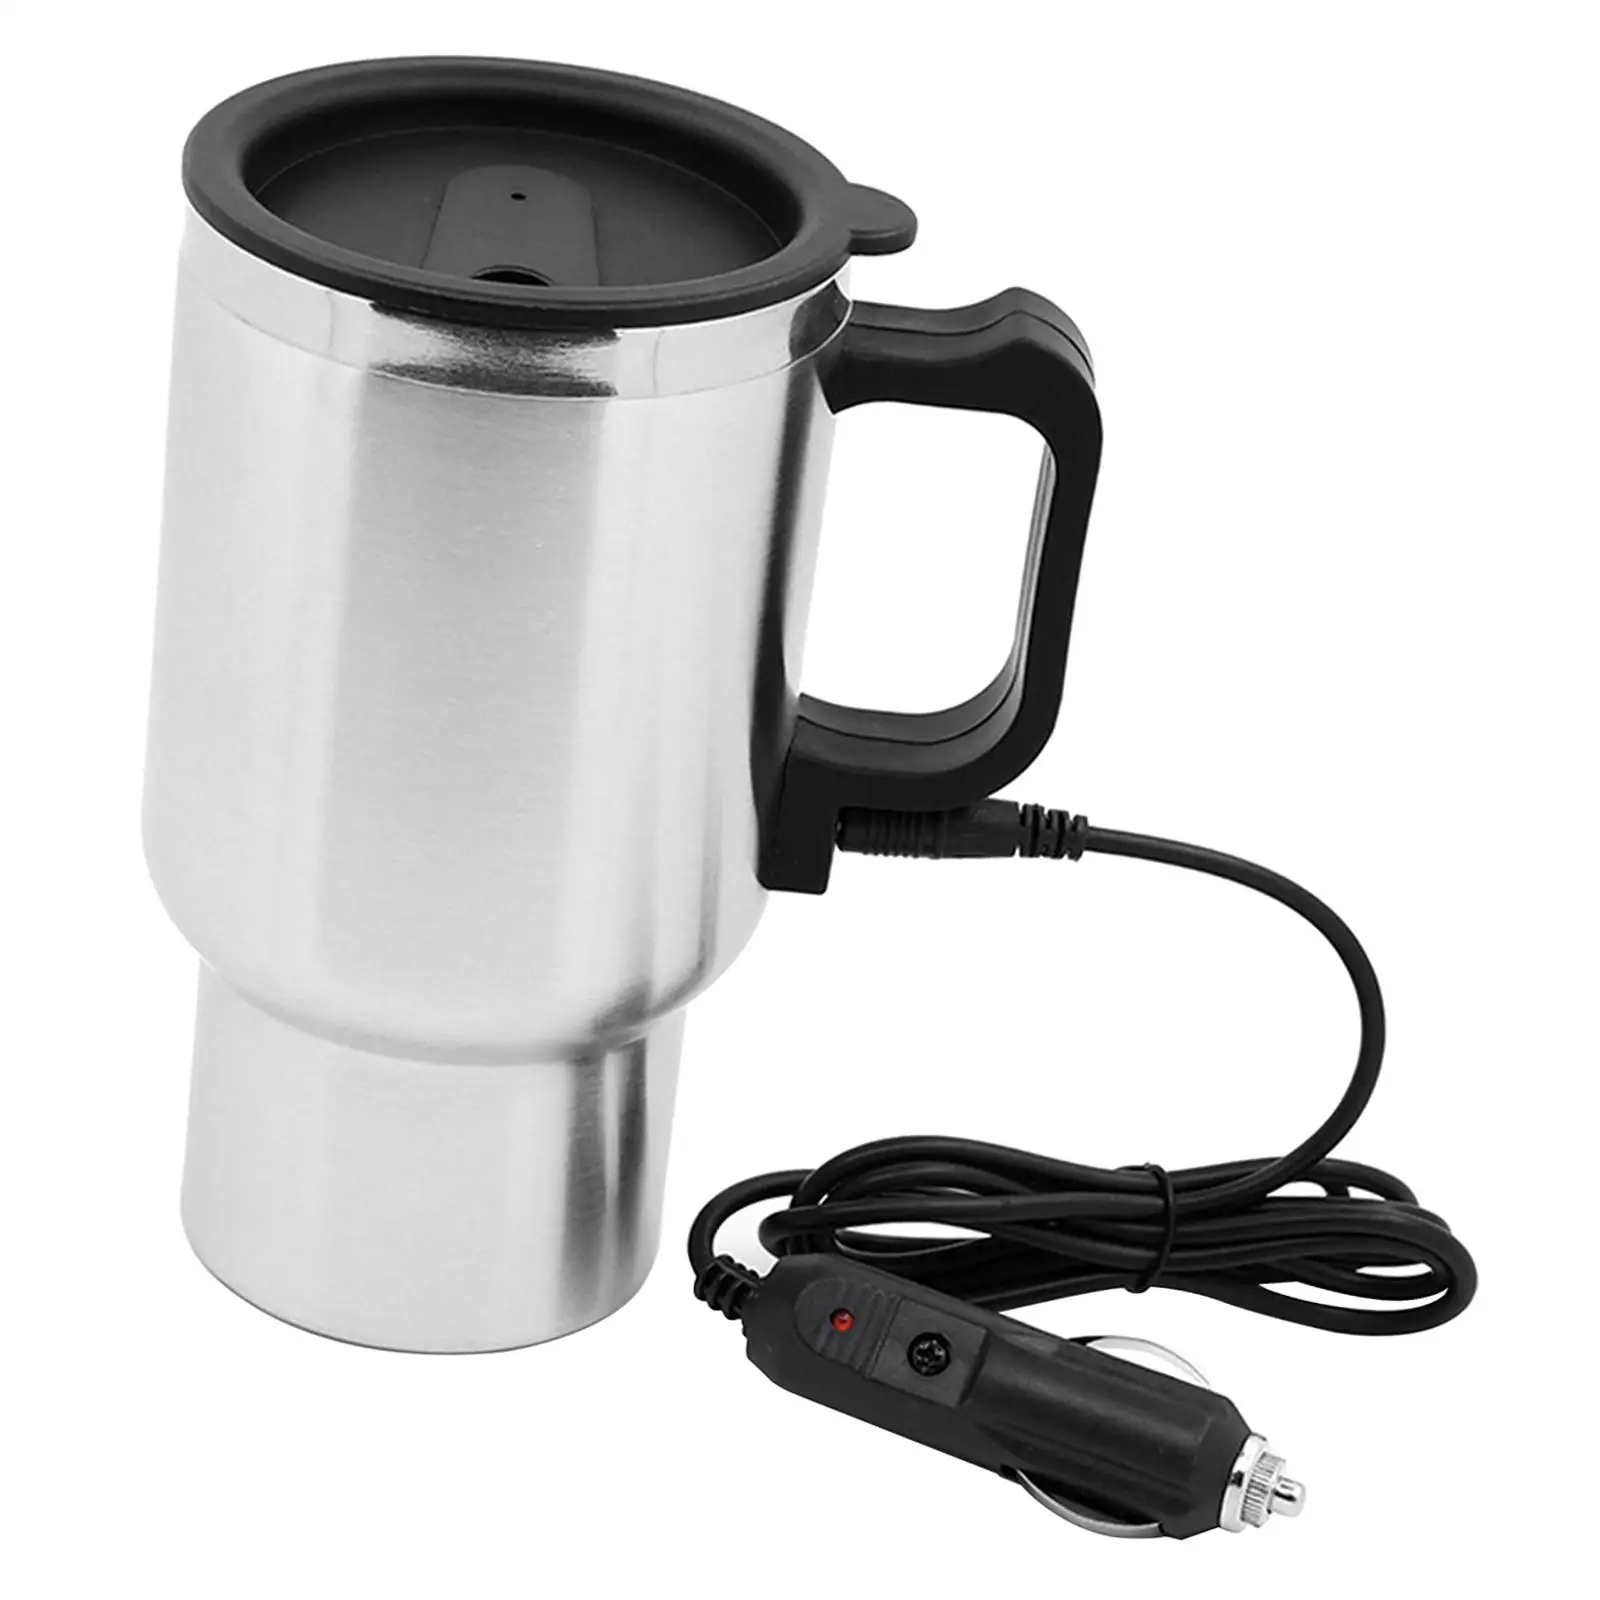 12V Car Heating Cup 500ml Car Kettle Heater for Tea Coffee